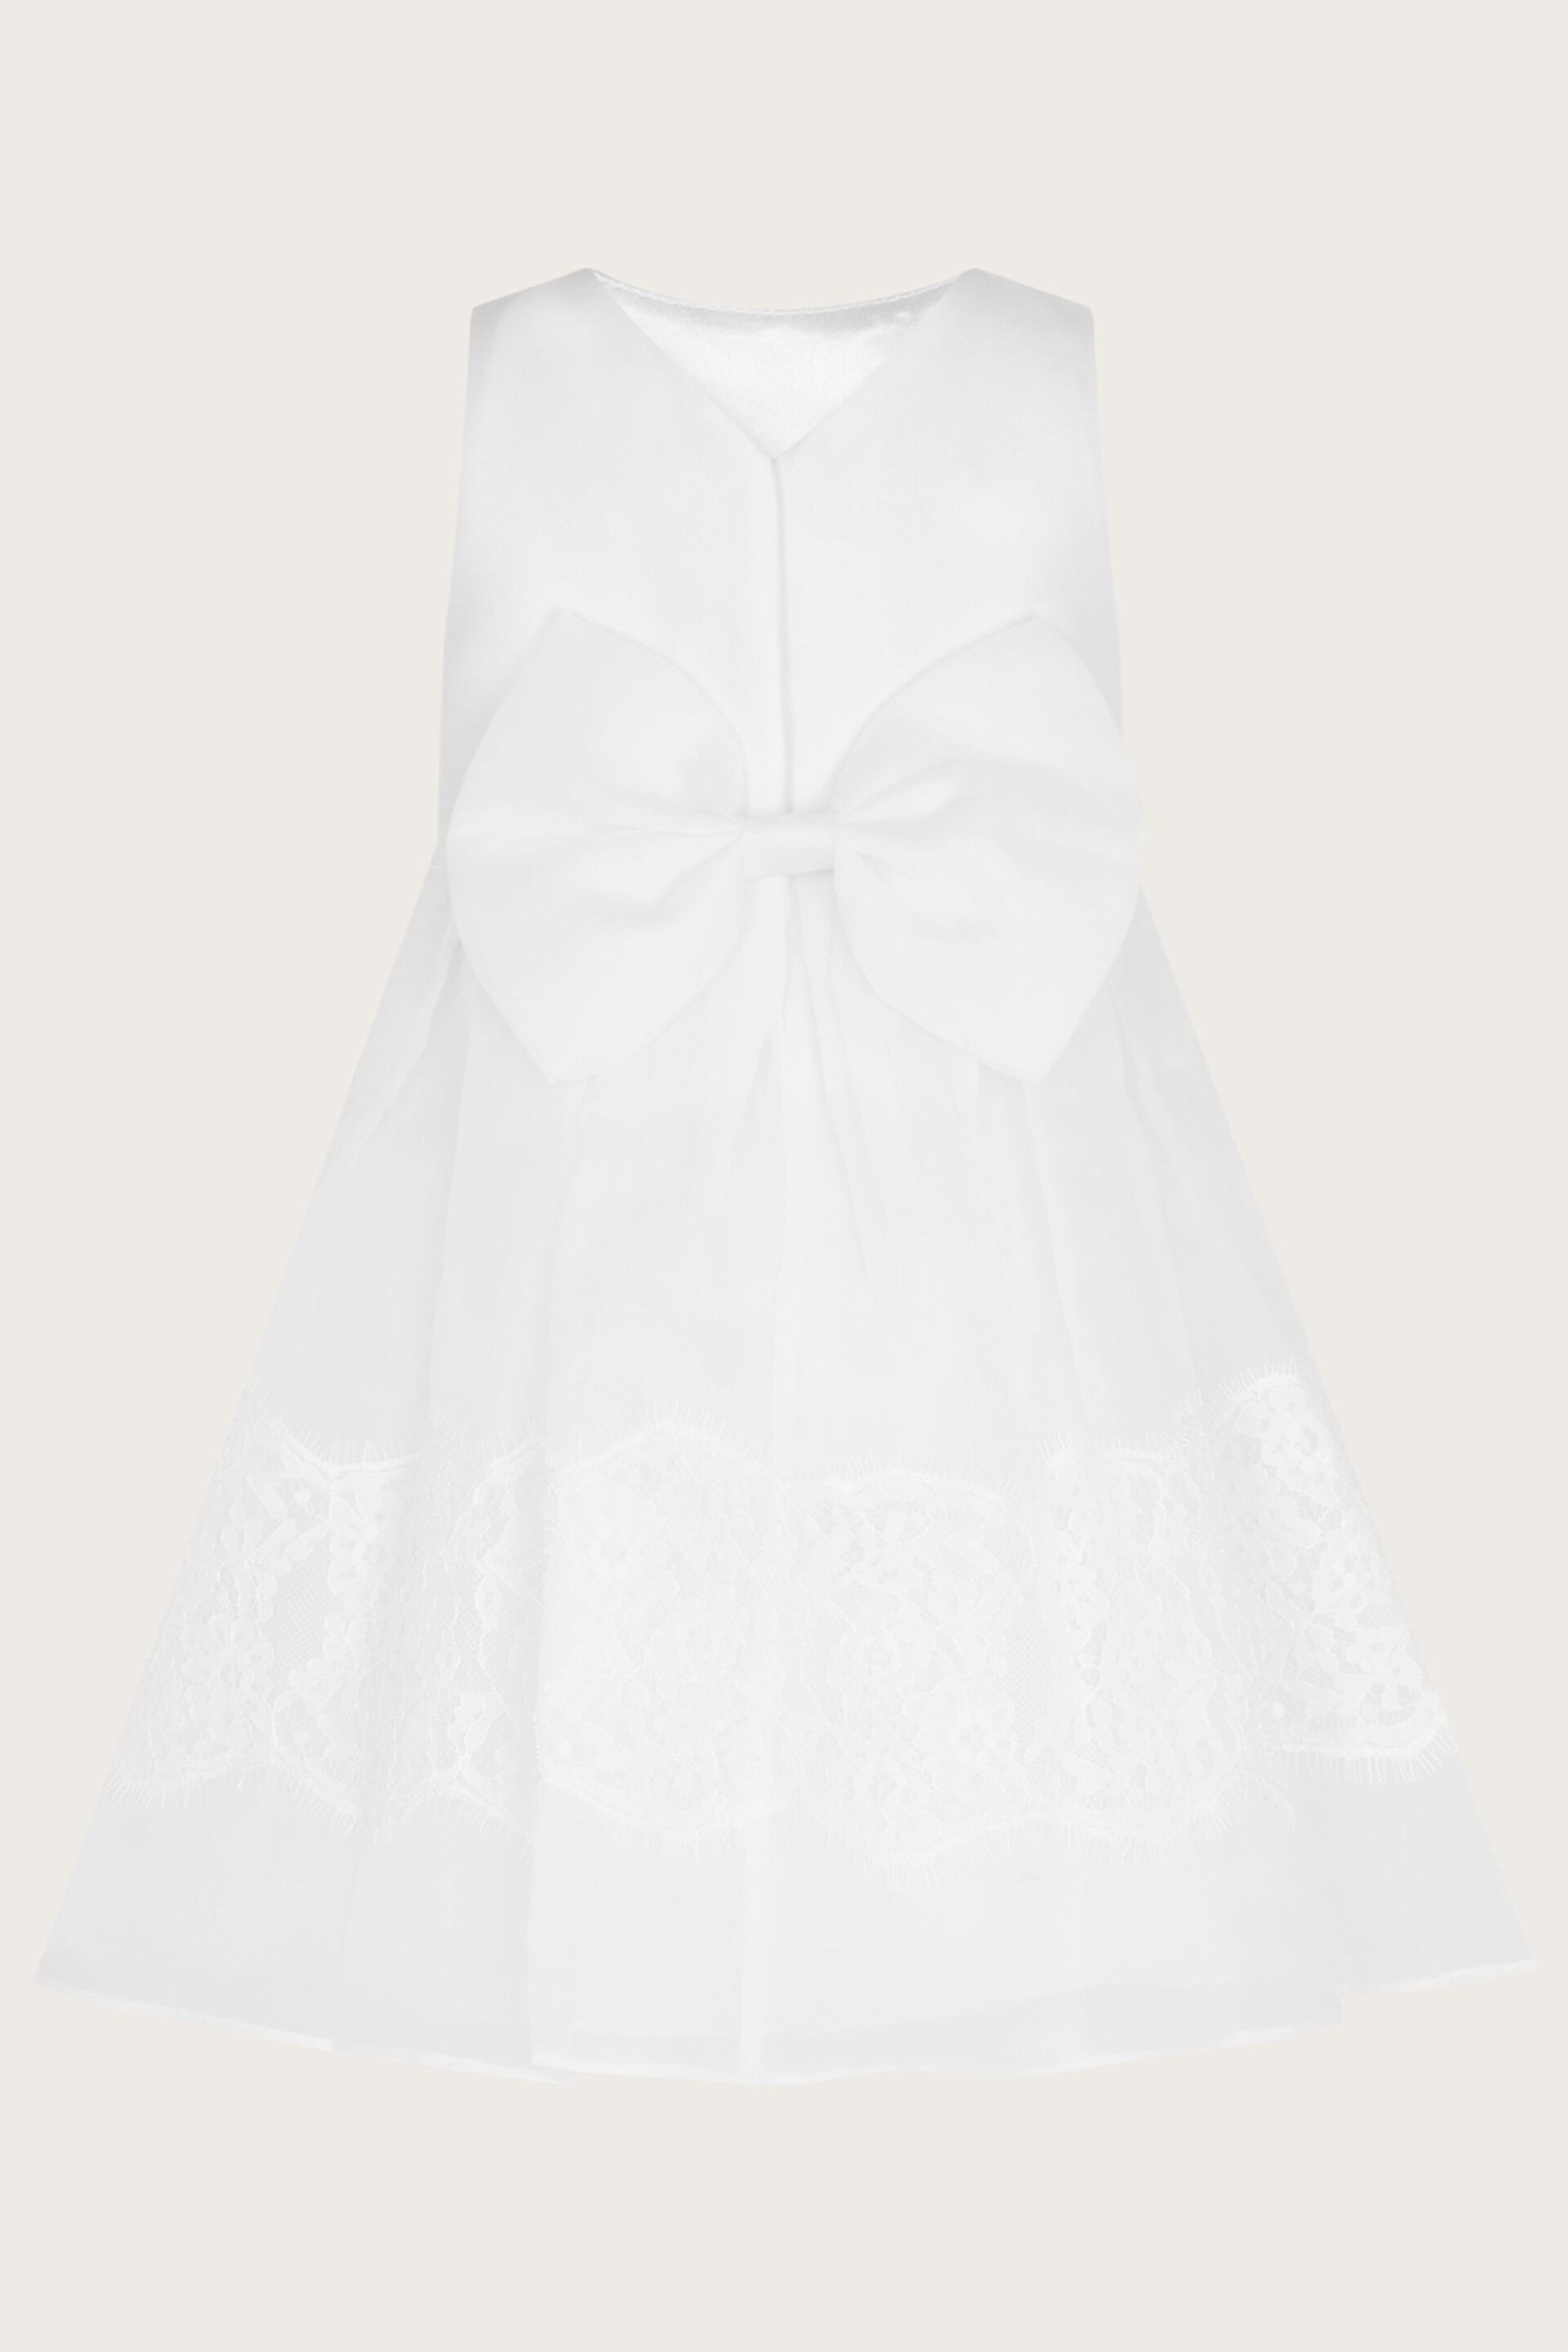 Monsoon White Lace Baby Alovette Communion Dress - Image 1 of 2